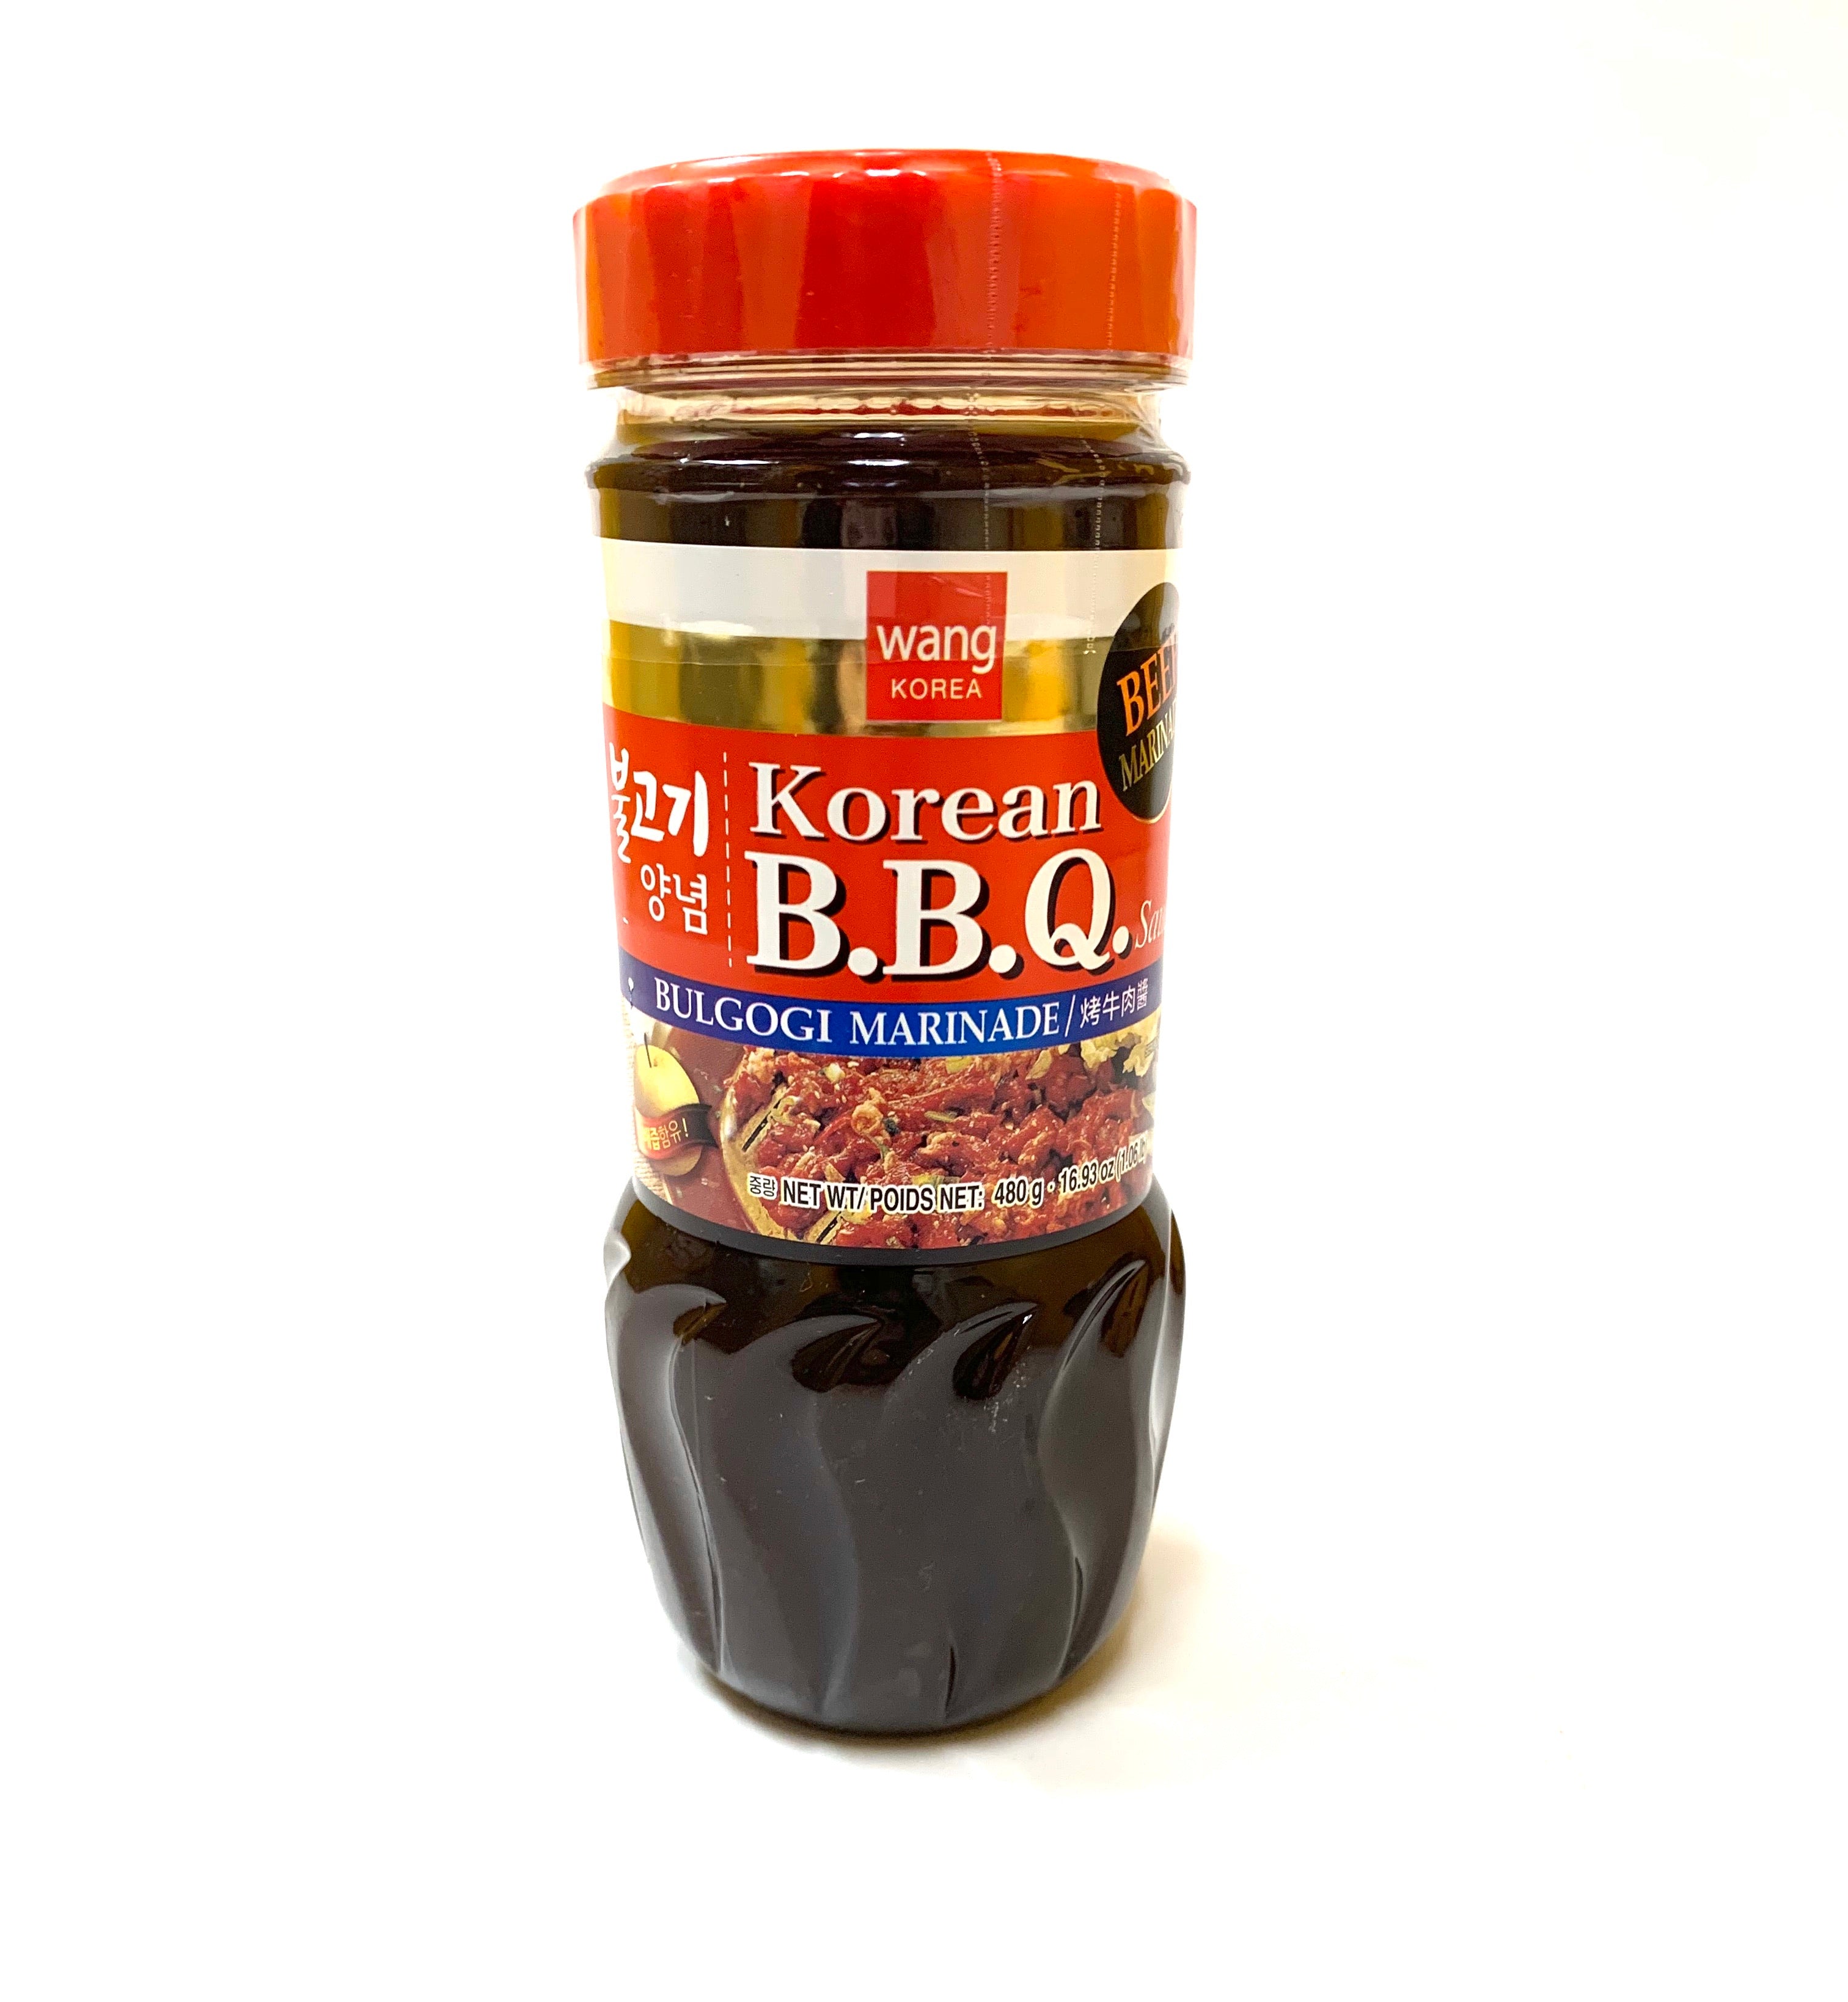 Wang Korean BBQ Sauce Bulgogi (carne de res) Marinada - 480g/16.93oz 